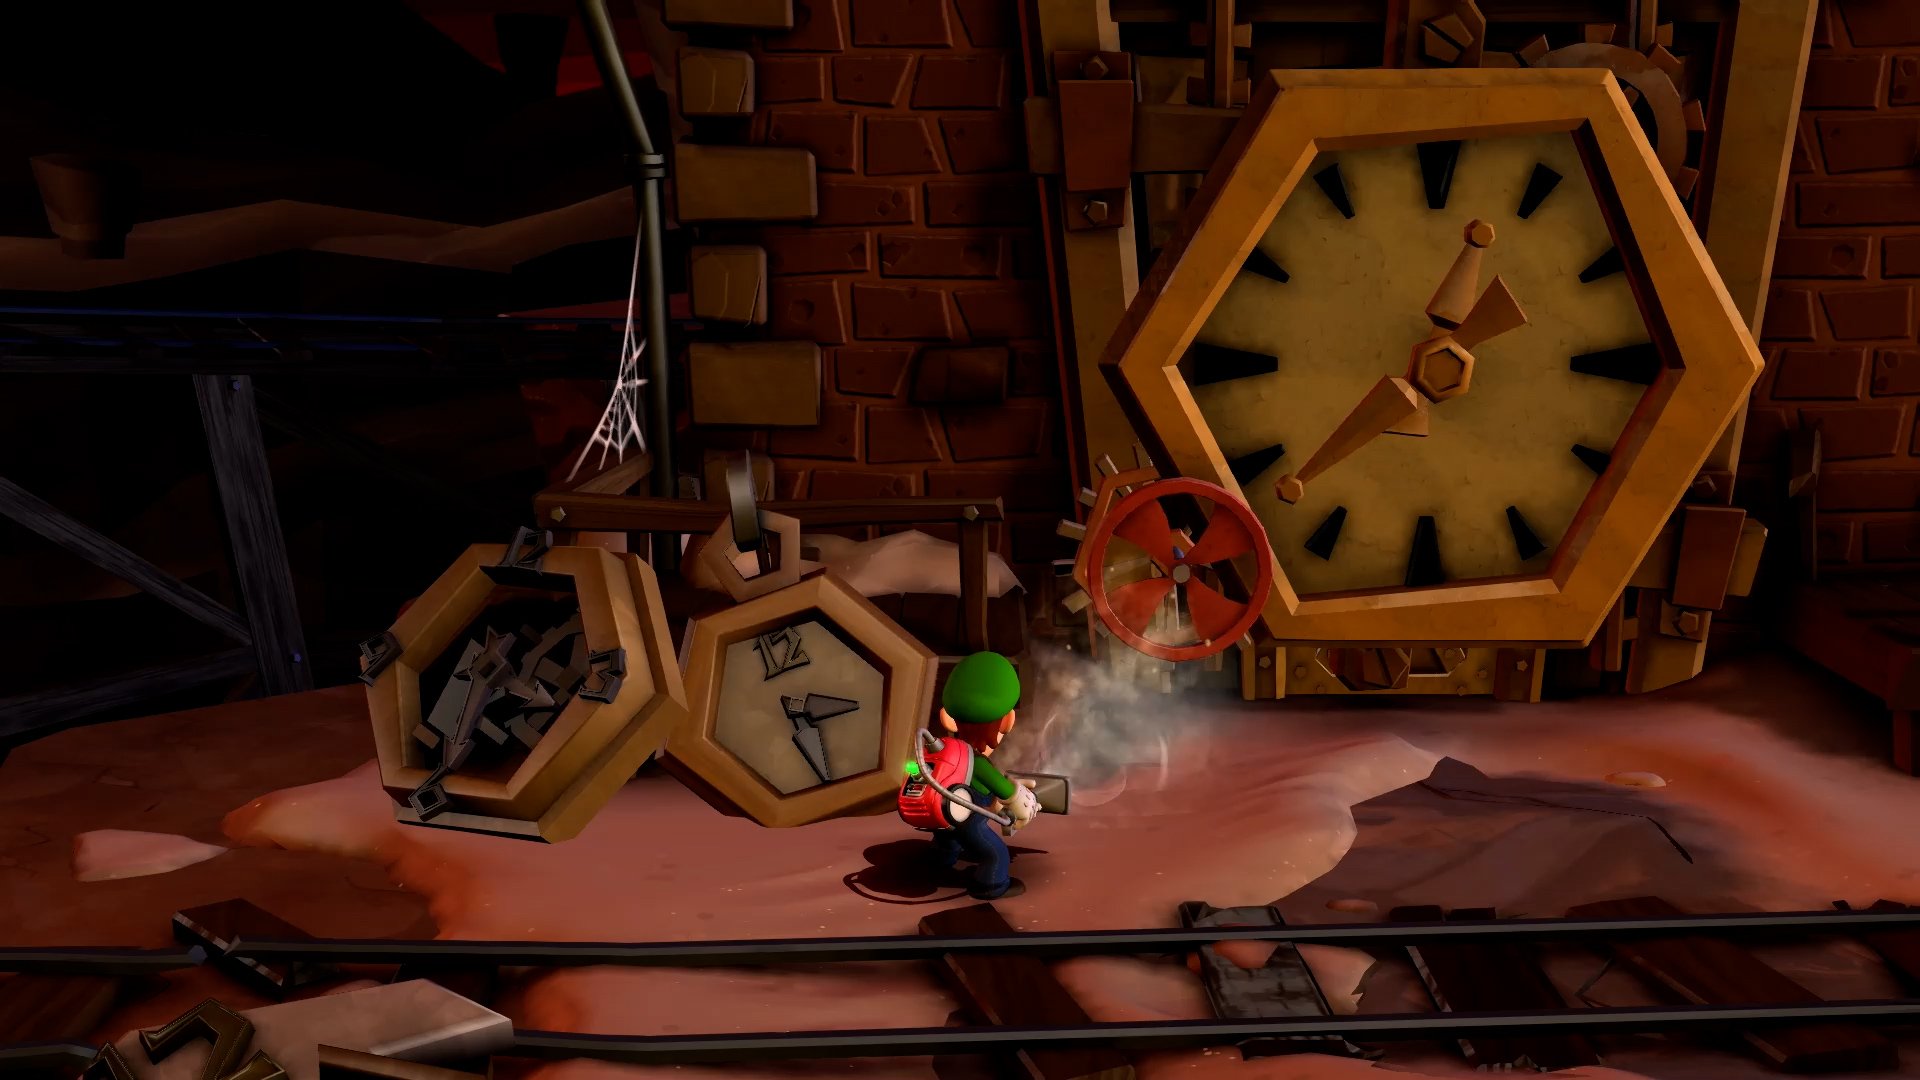 New Luigi's Mansion 2 Details - Game Informer